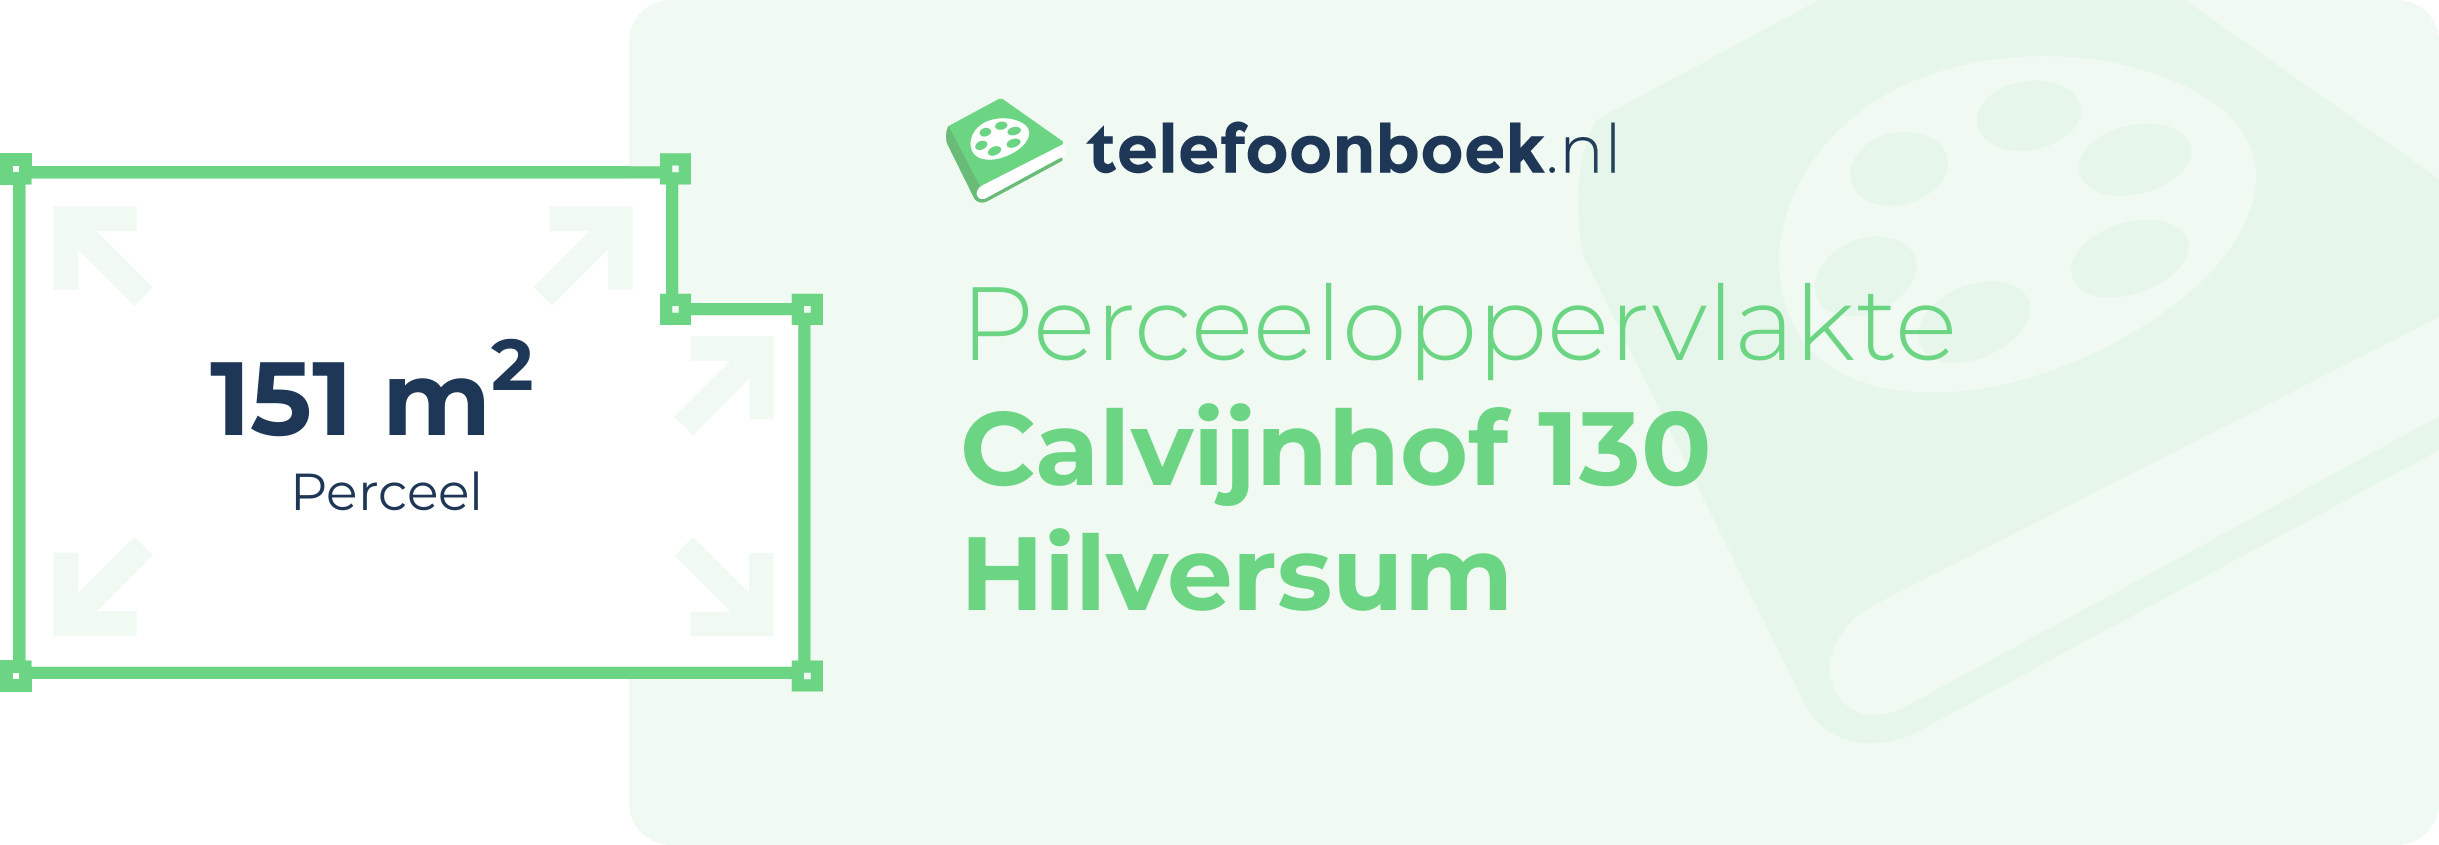 Perceeloppervlakte Calvijnhof 130 Hilversum